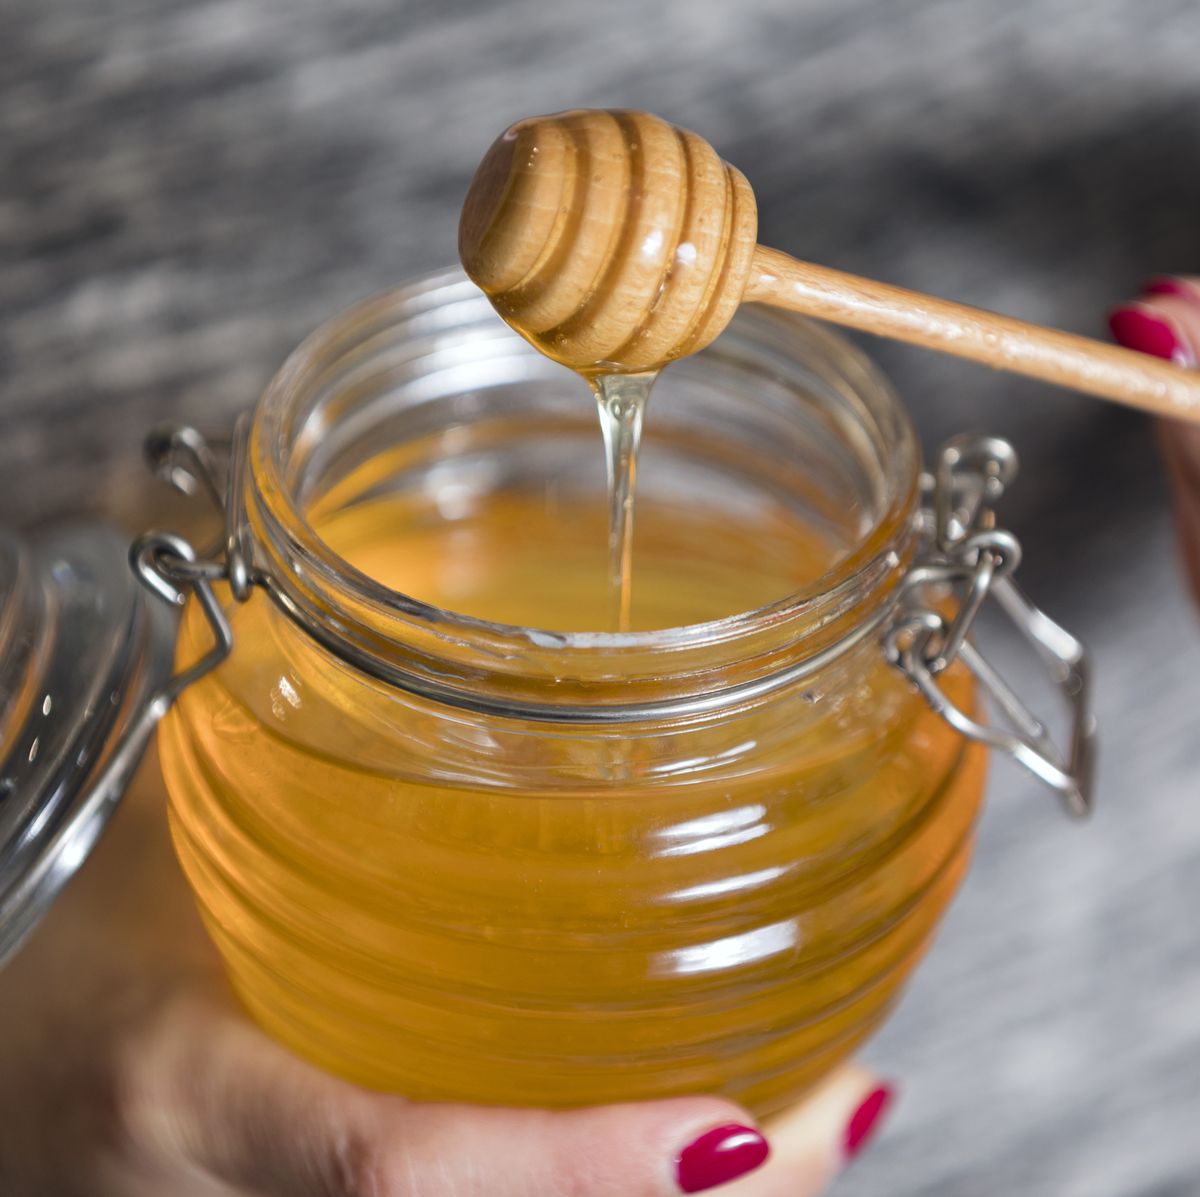 Most Authentic Manuka Honey: Nature’s Golden Wonder